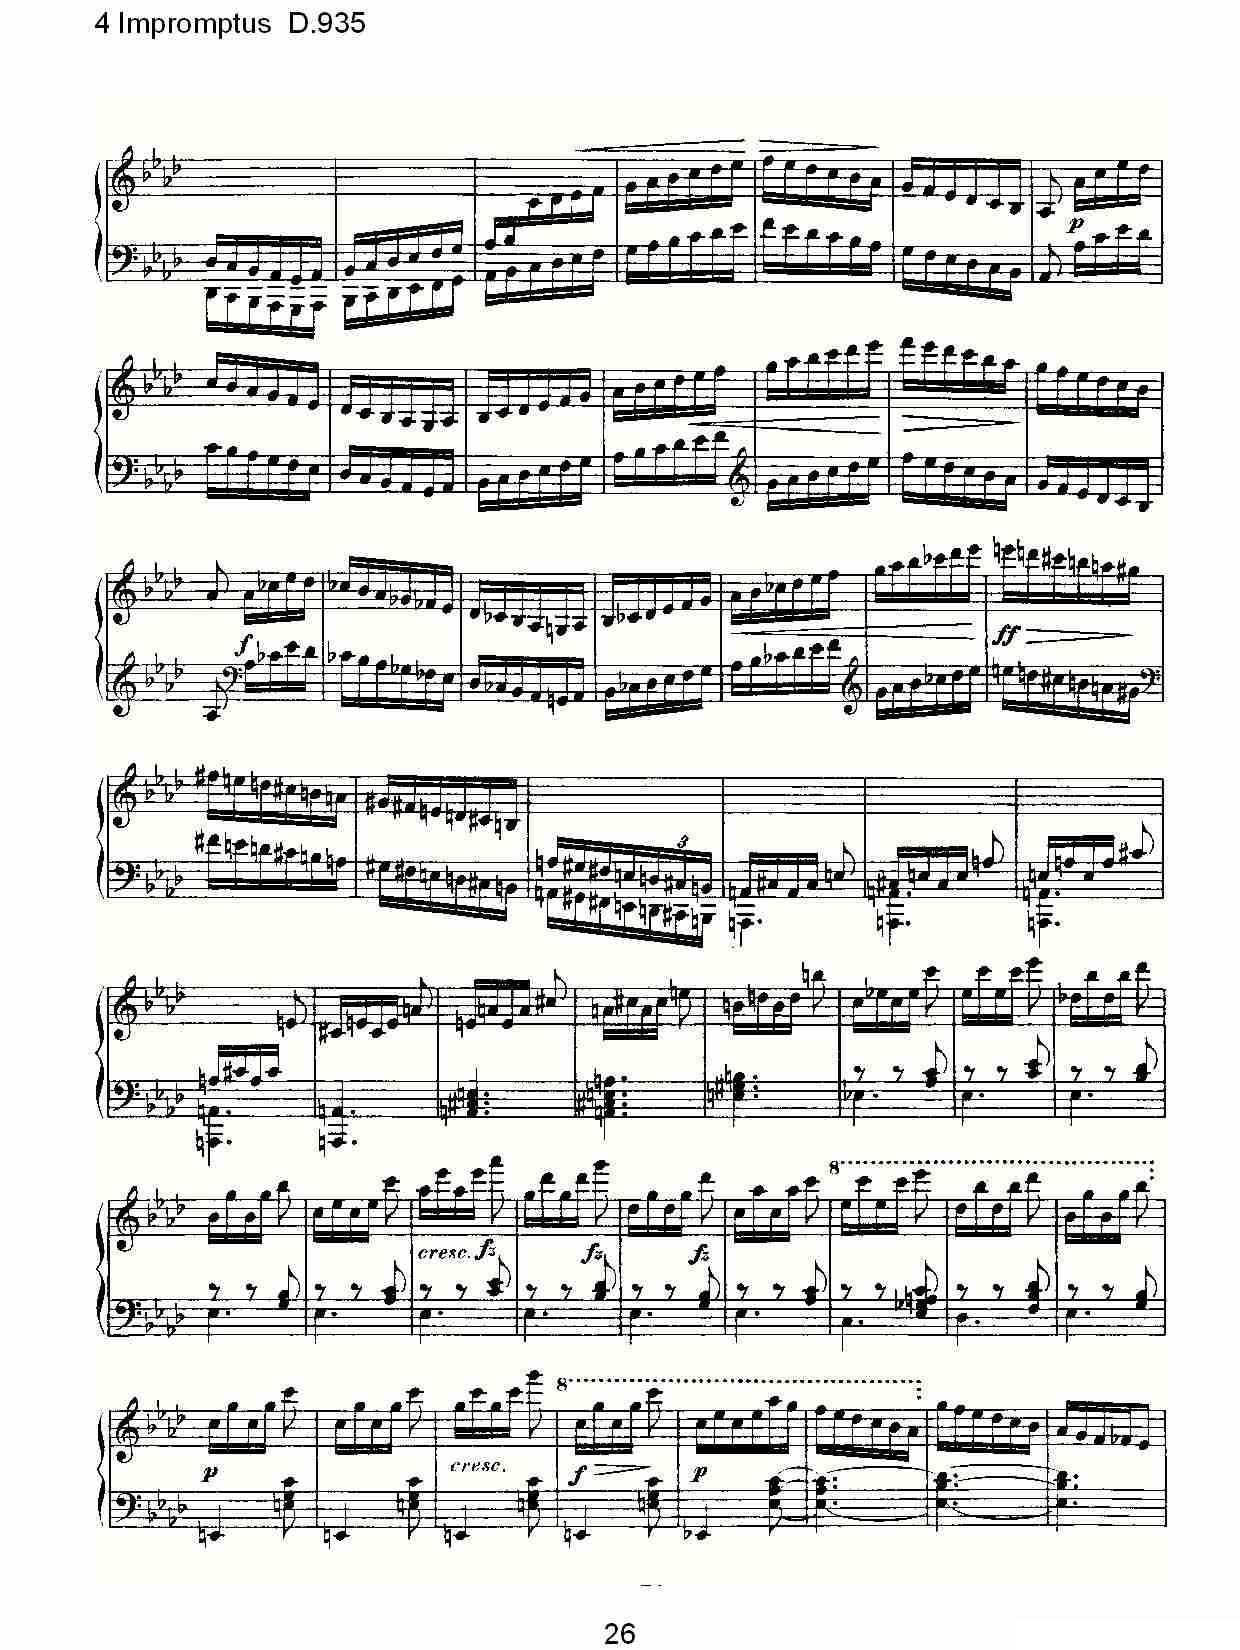 4 Impromptus D.935（4人即兴演奏D.935）钢琴曲谱（图26）